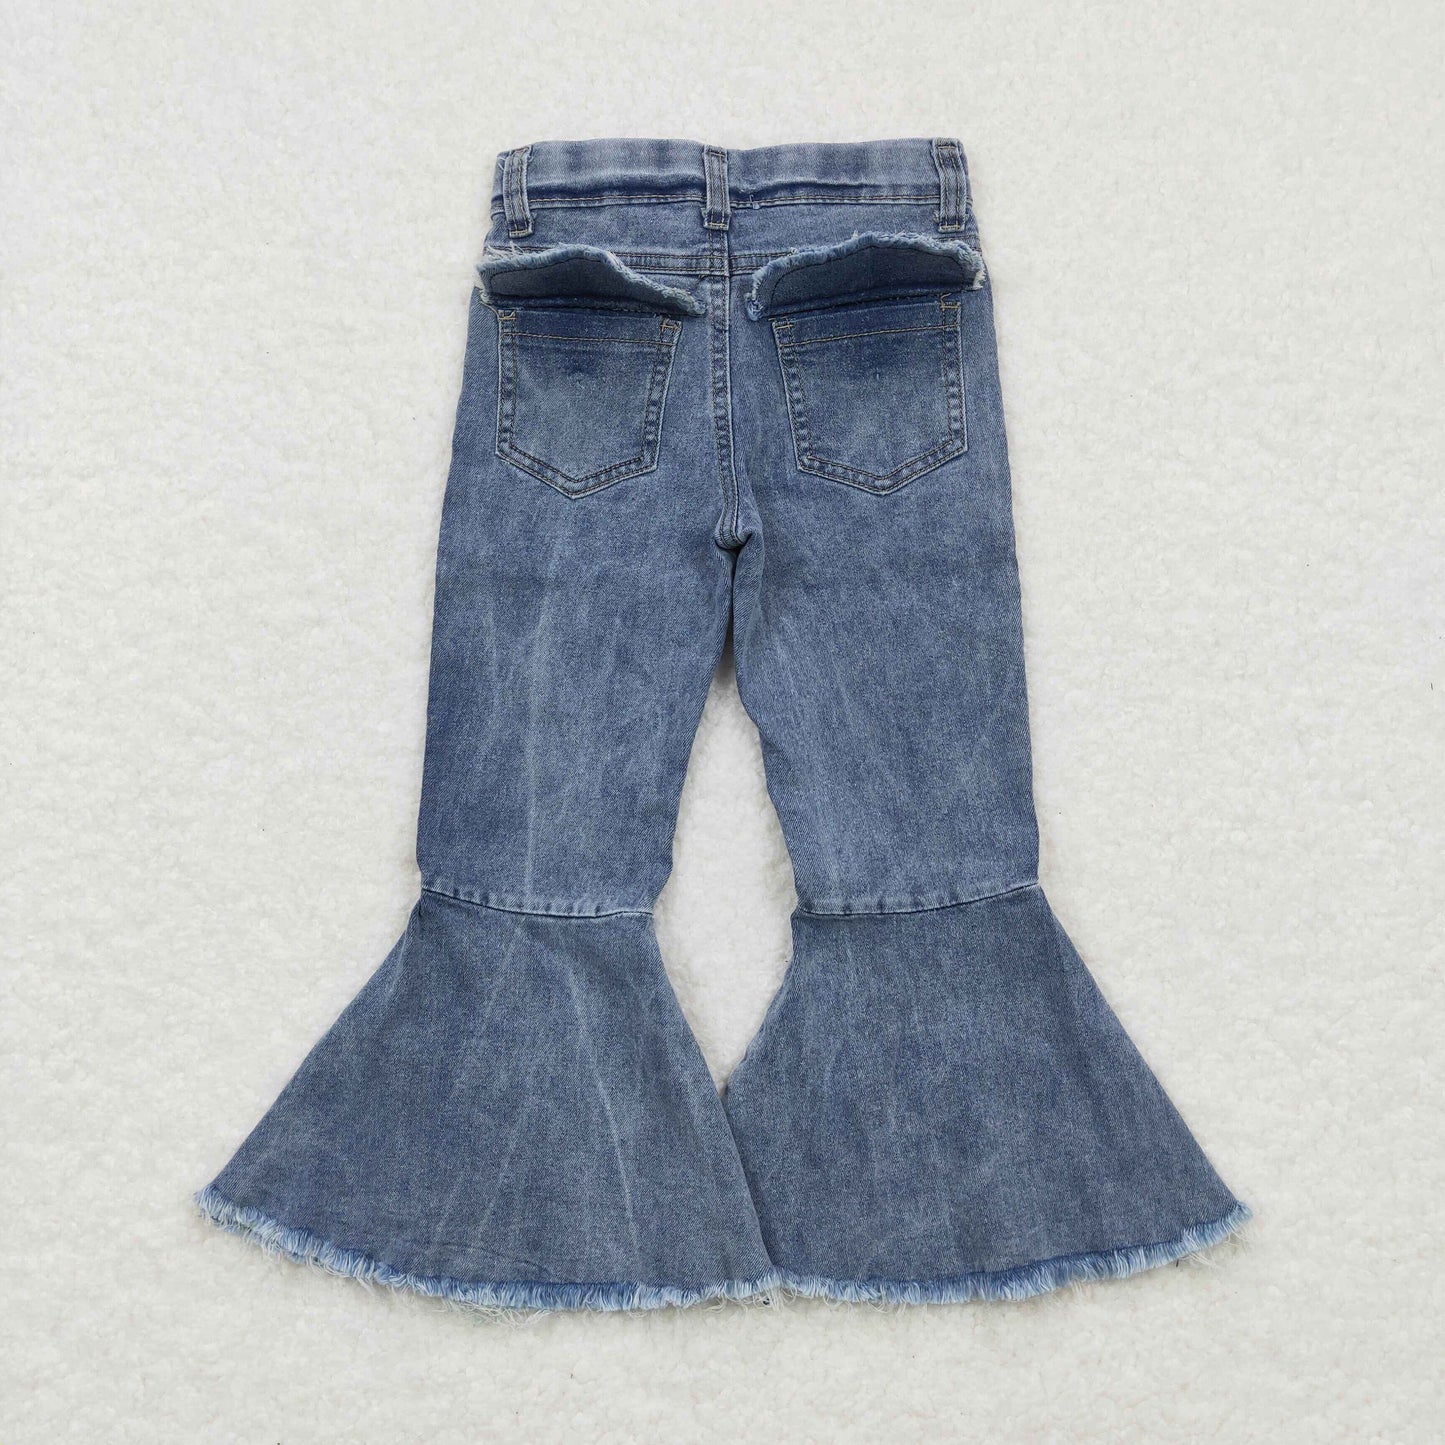 light blue bell jeans girls denim pants with pocket